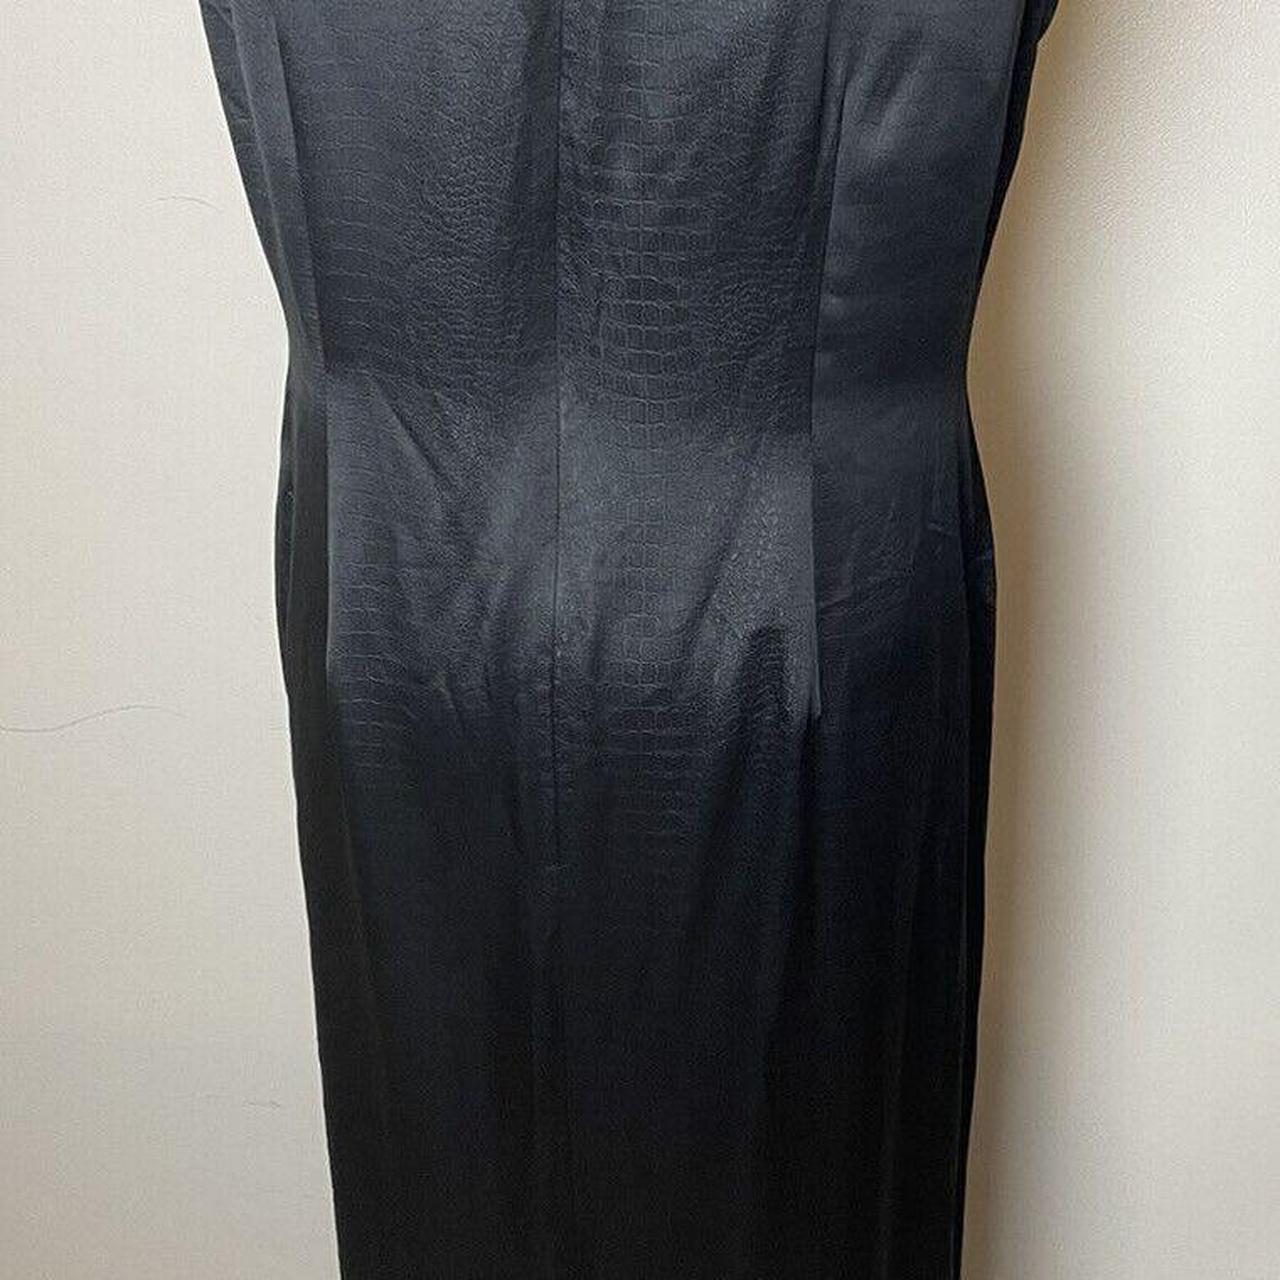 Debenhams Women's Black Dress (3)